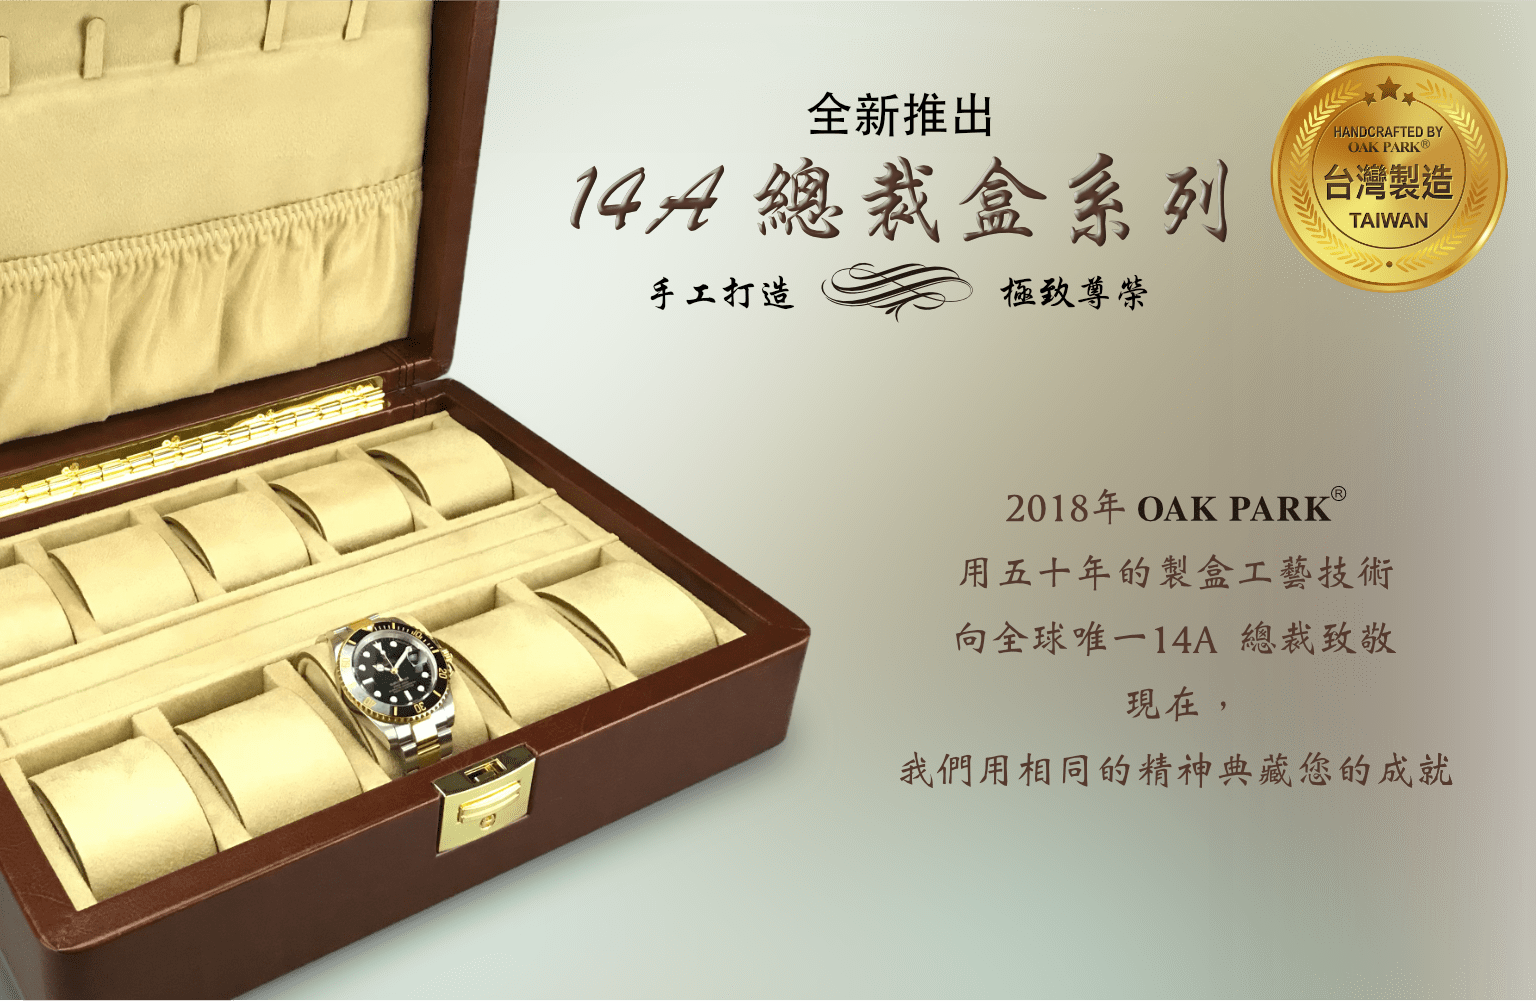 14A 總裁腕錶收藏盒，是宏祥錦盒五十年來做得最好的錶盒，設計起源於2018年為全球唯一14Ａ評等的央行總裁所設計的退休紀念獎章盒，在手工盒的每個工序都用最高標準製作，是最高等級的產品包裝盒